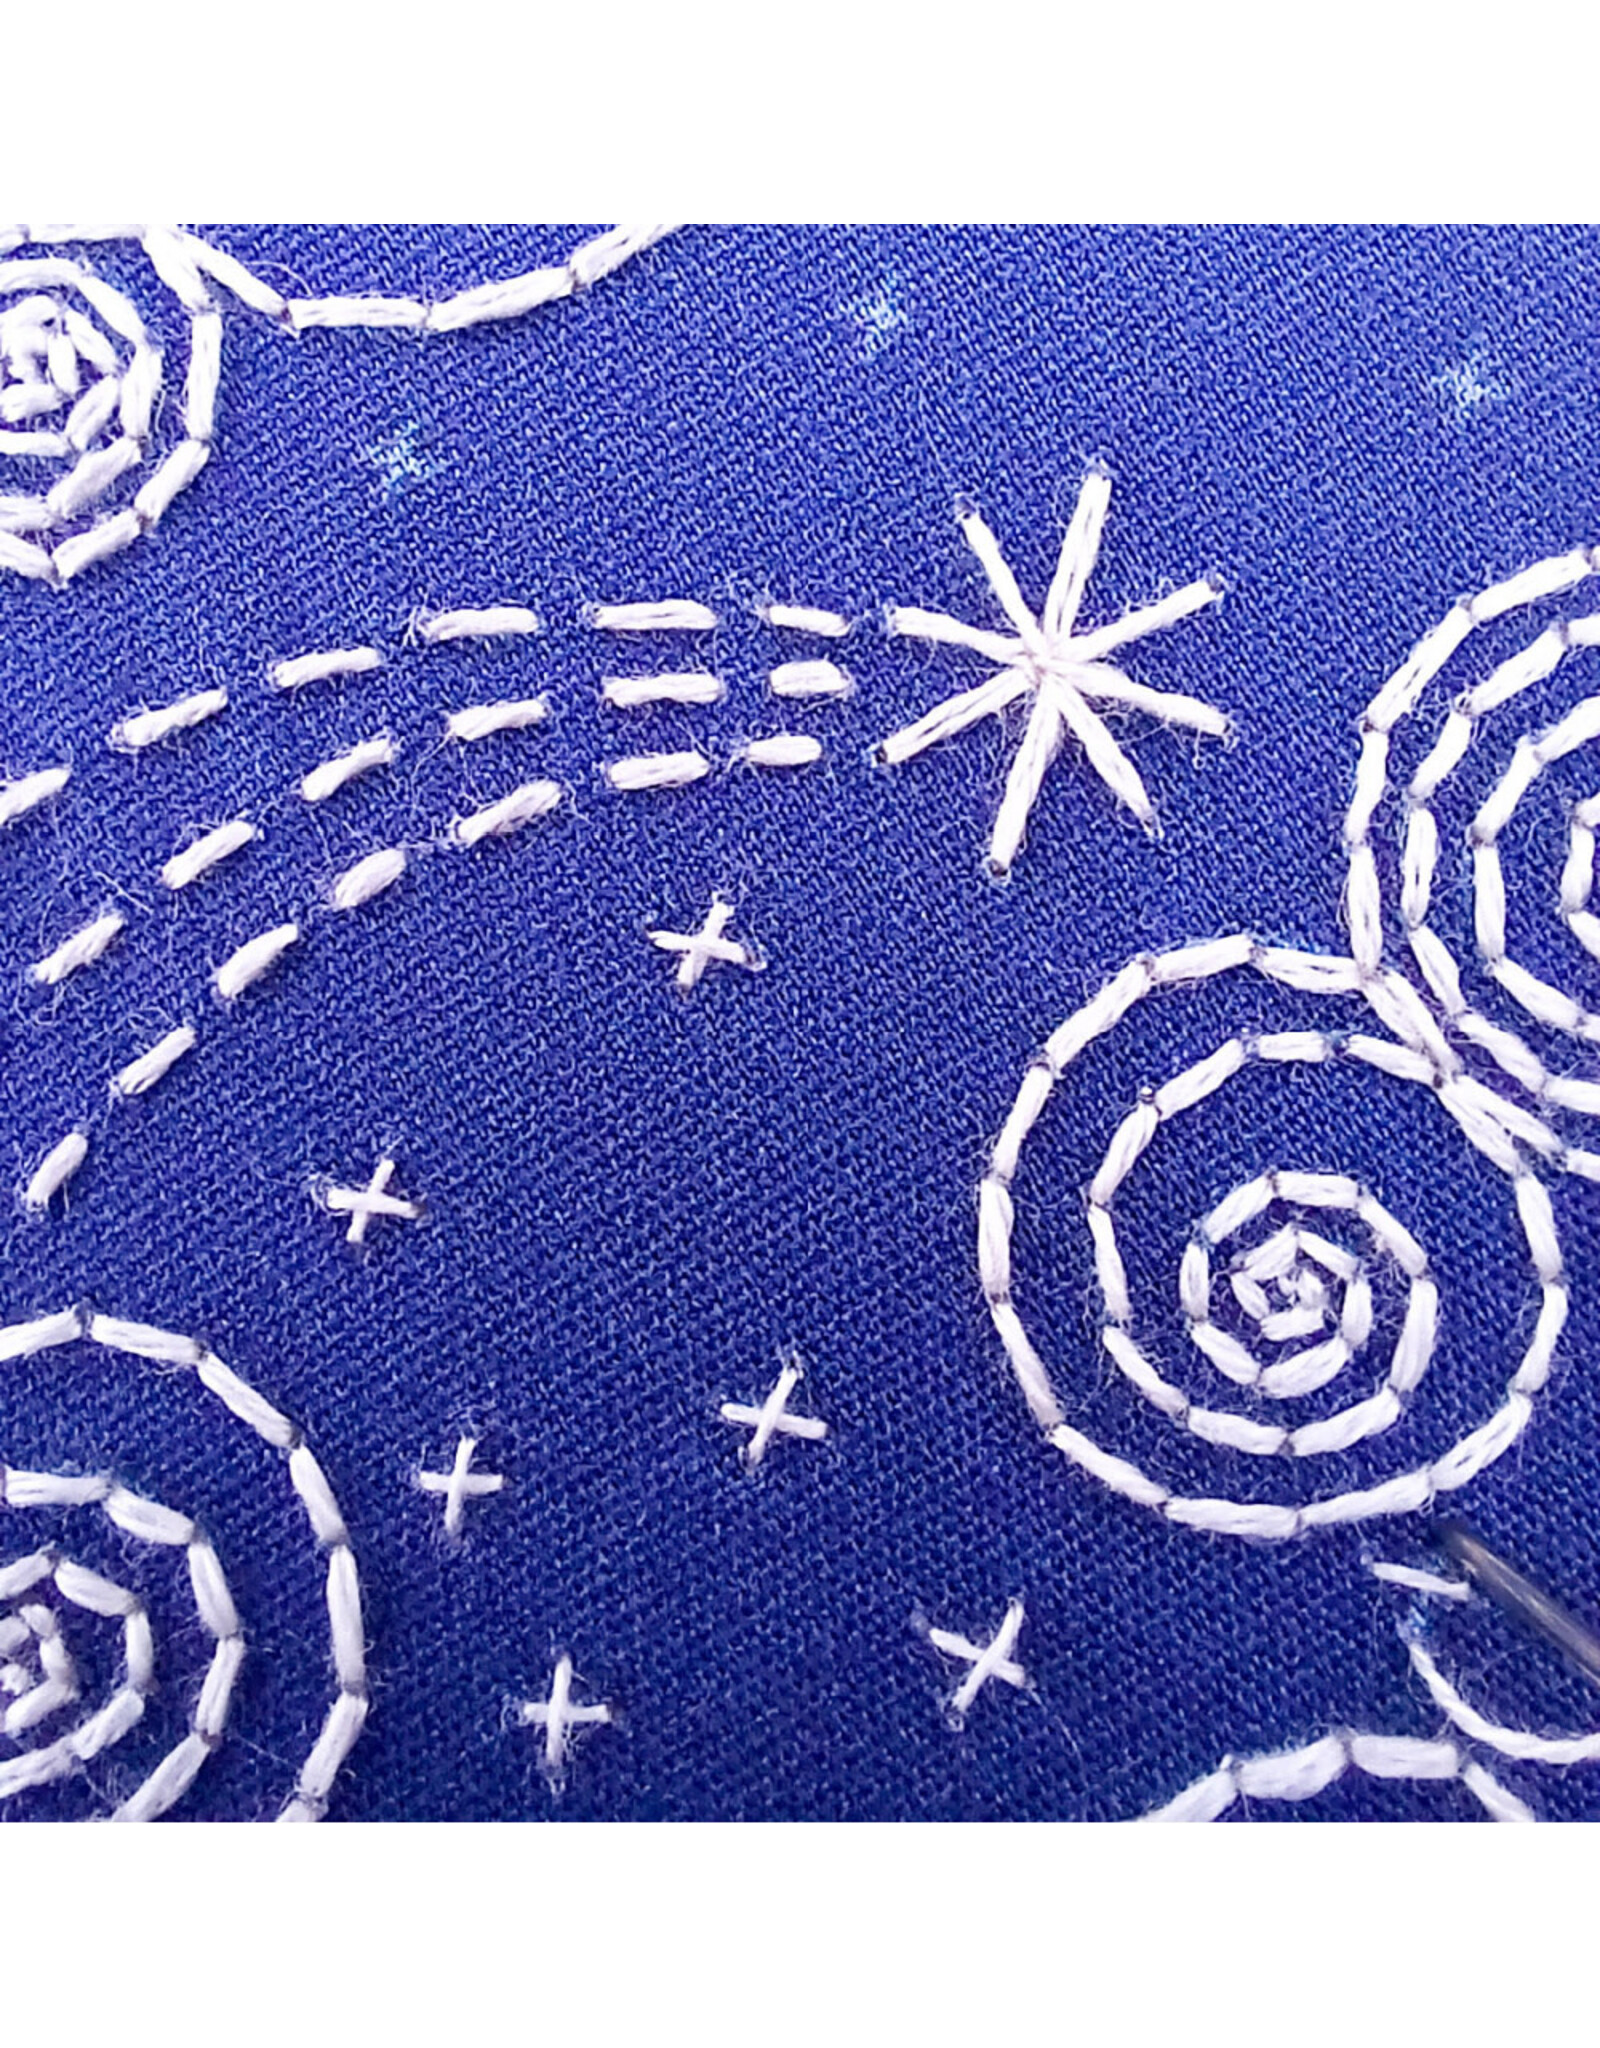 cozyblue Night Sky Embroidery Kit from cozyblue